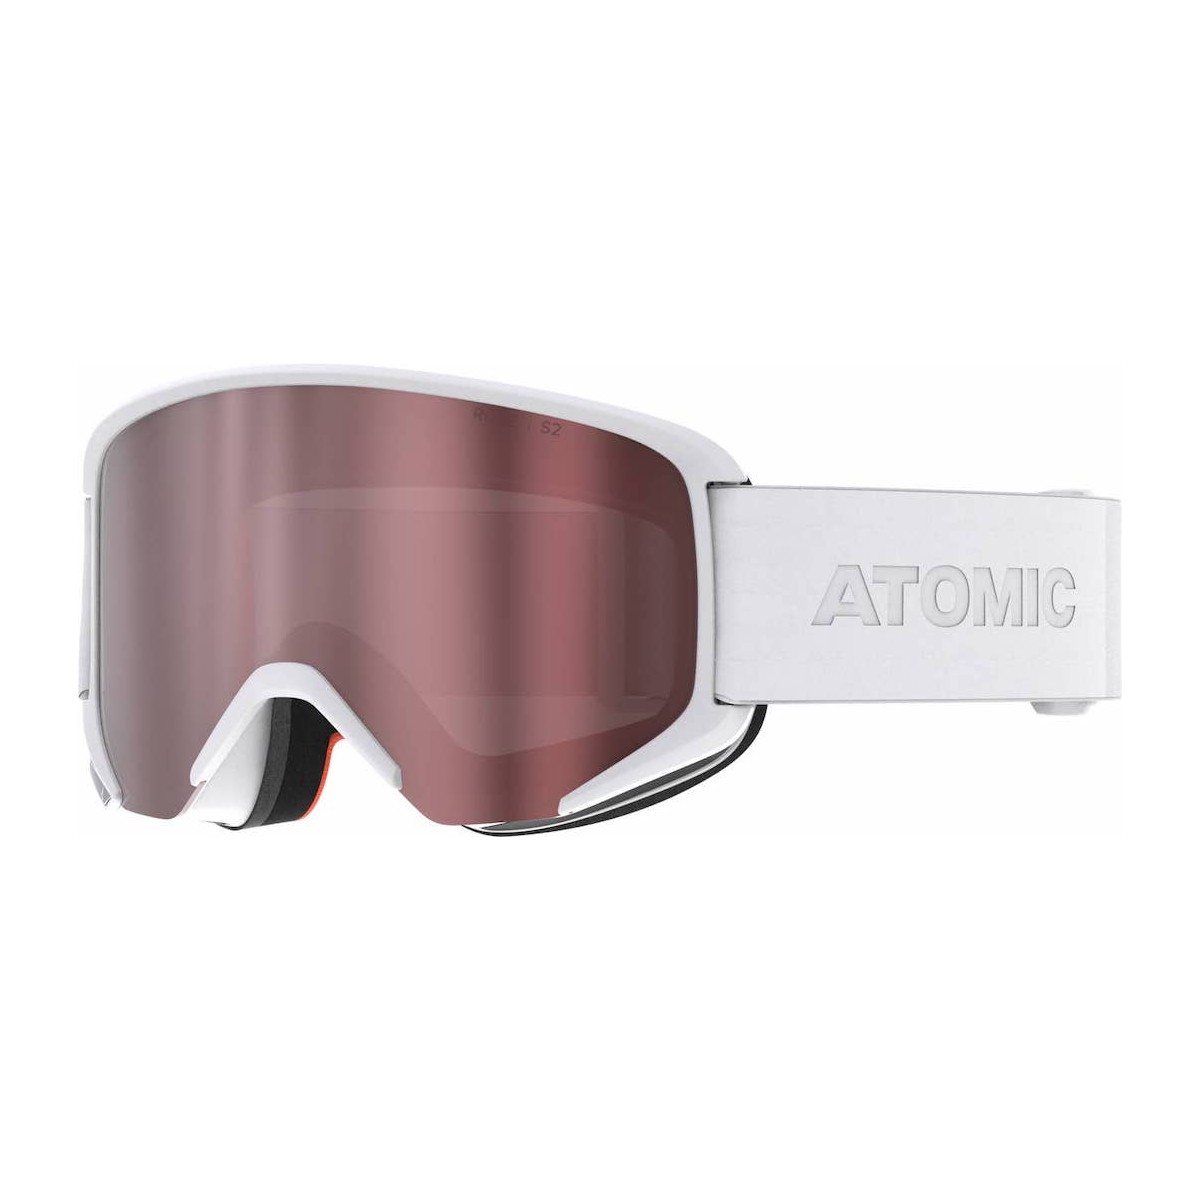 ATOMIC SAVOR W/SILVER FLASH C2 goggles - white